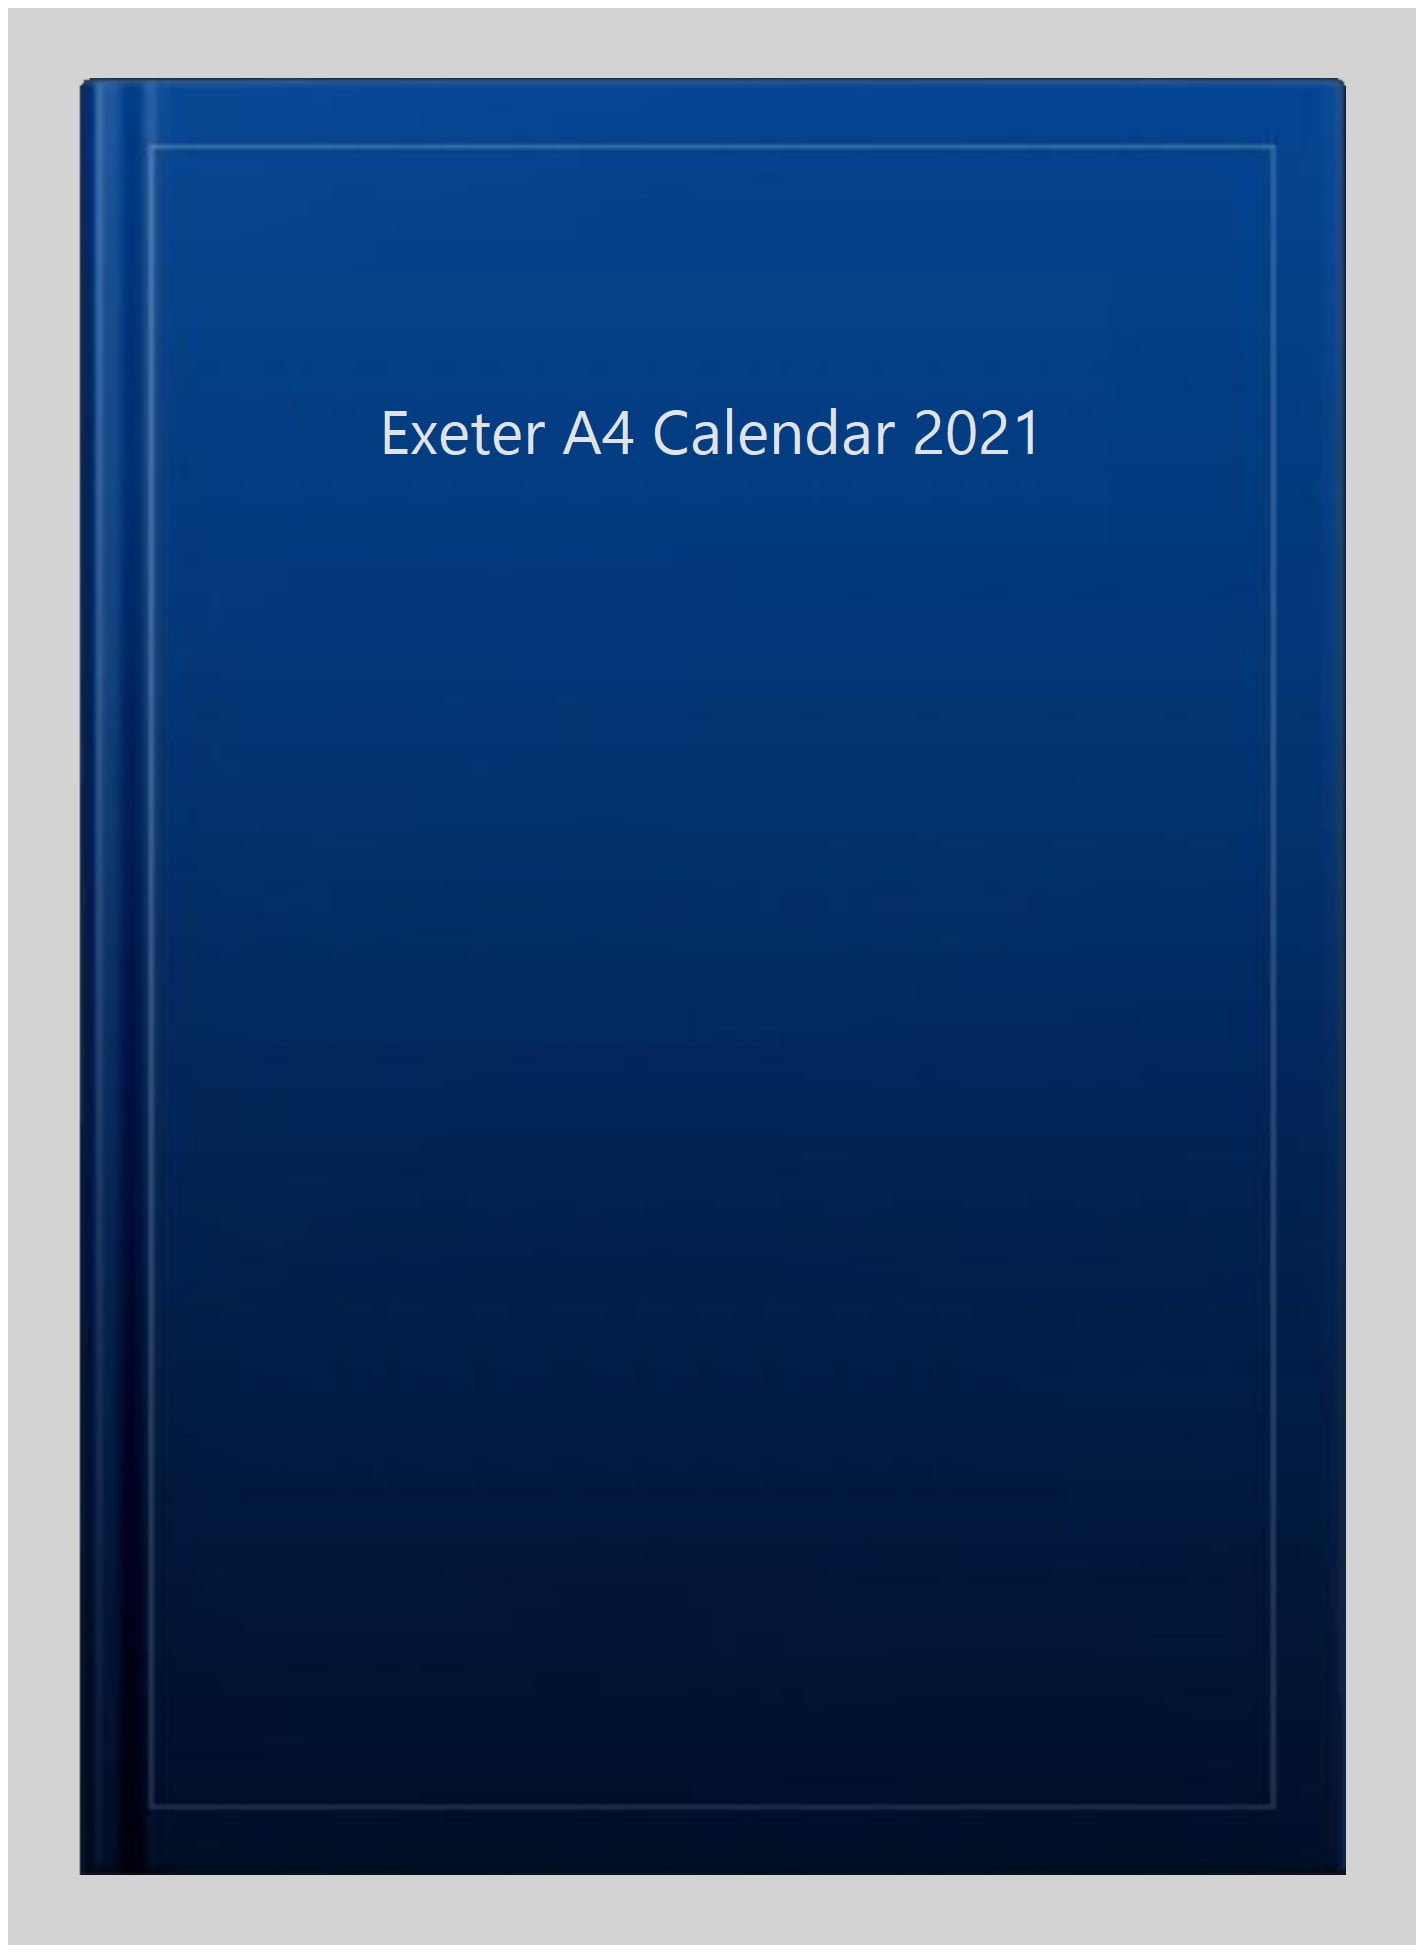 exeter-a4-calendar-2021-walmart